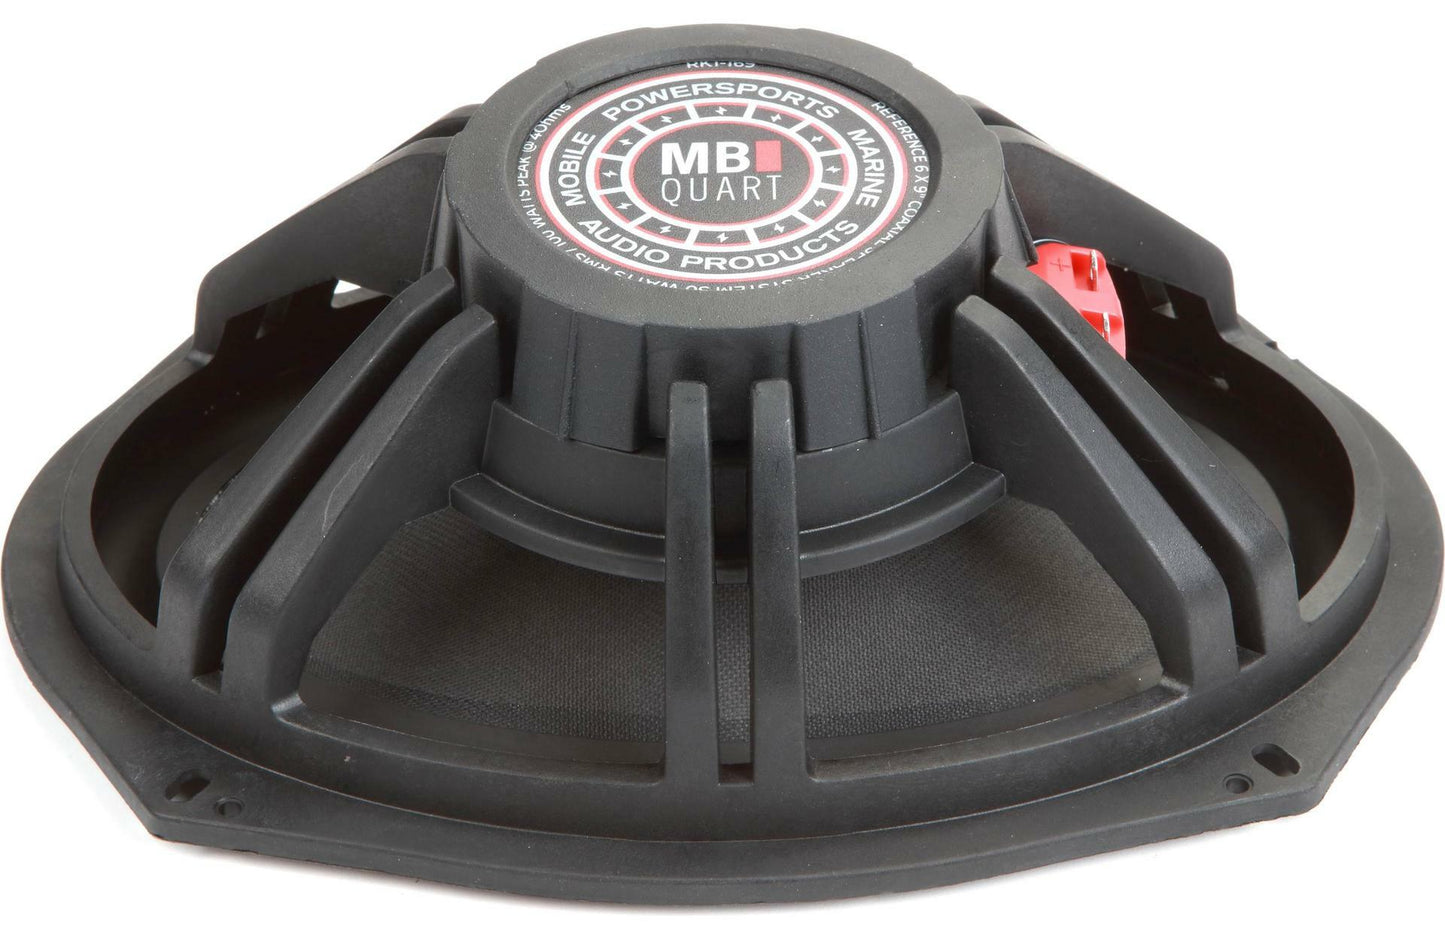 MB Quart RK1-169 Reference Series 6"x9" 2-Way Car Speakers